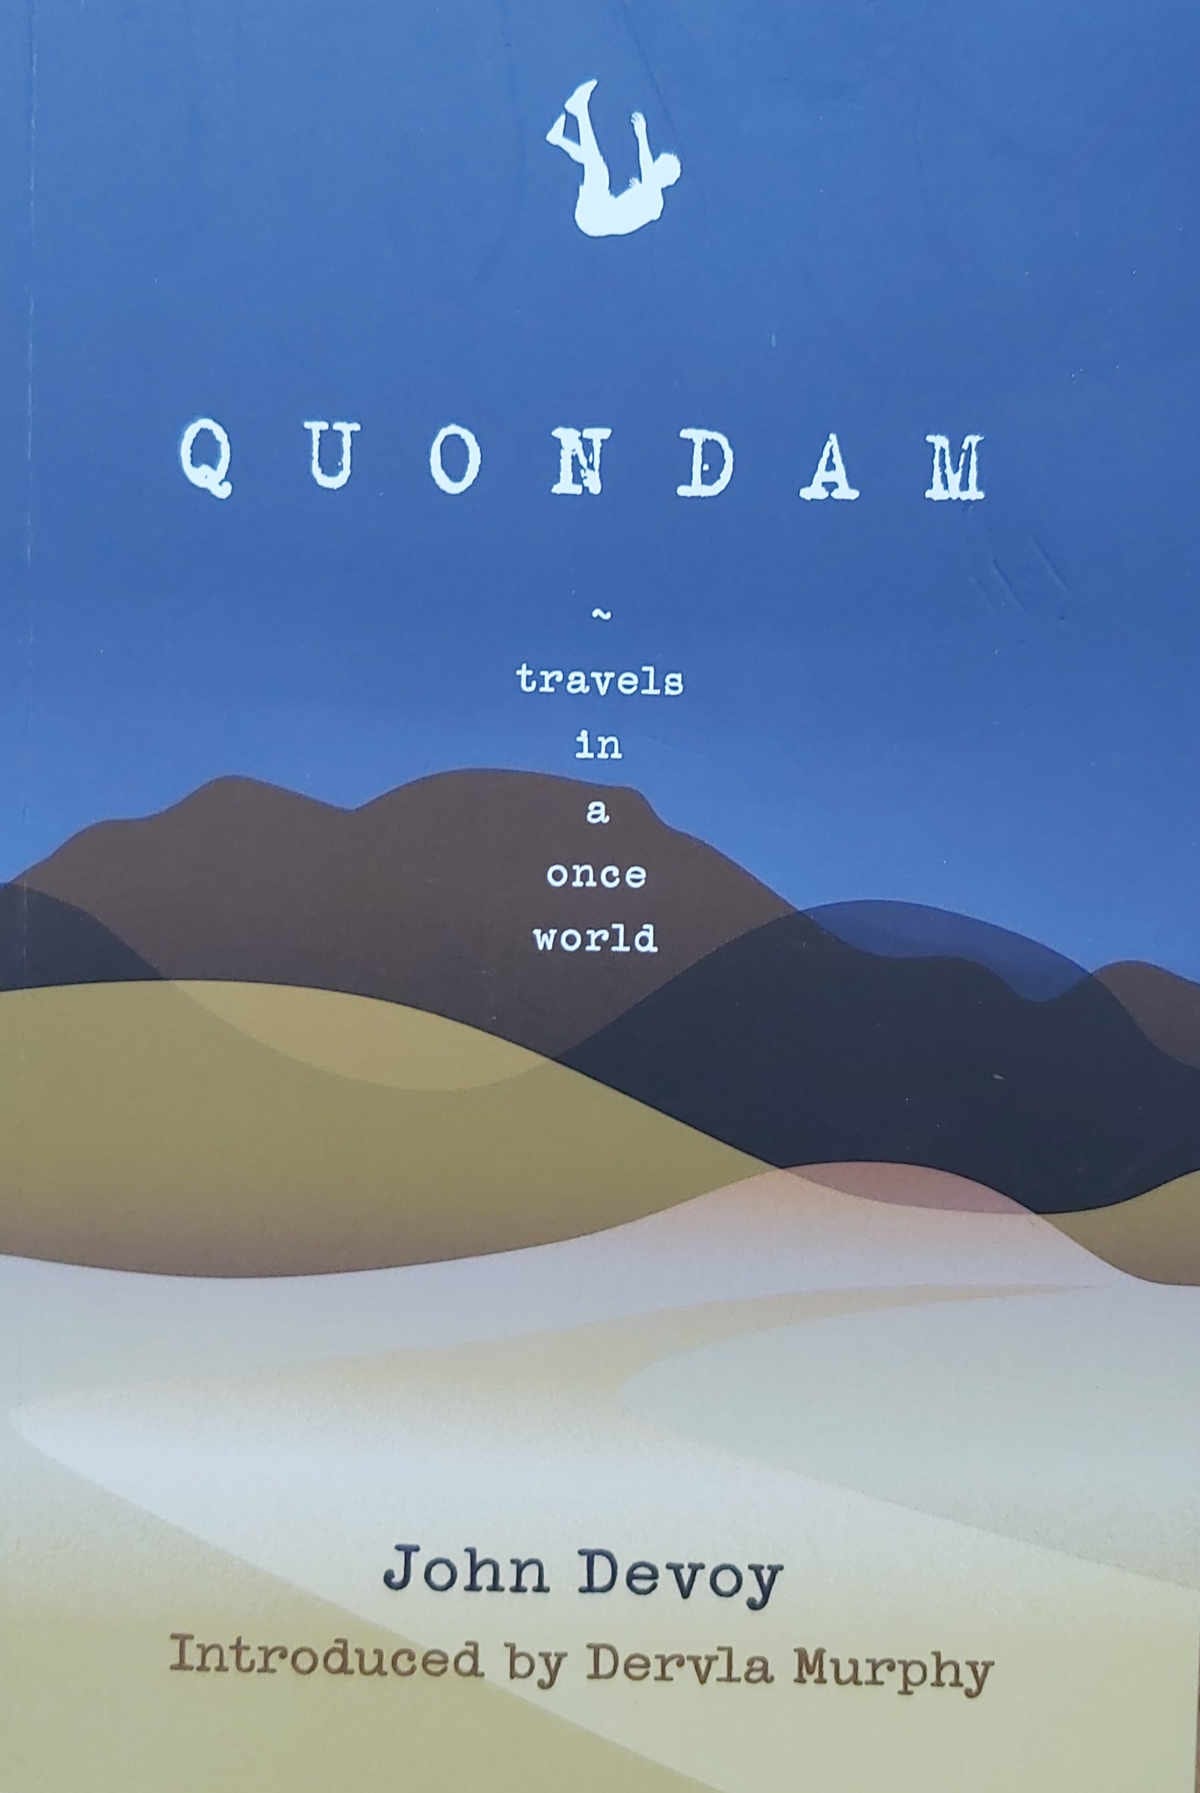 Quondam book cover